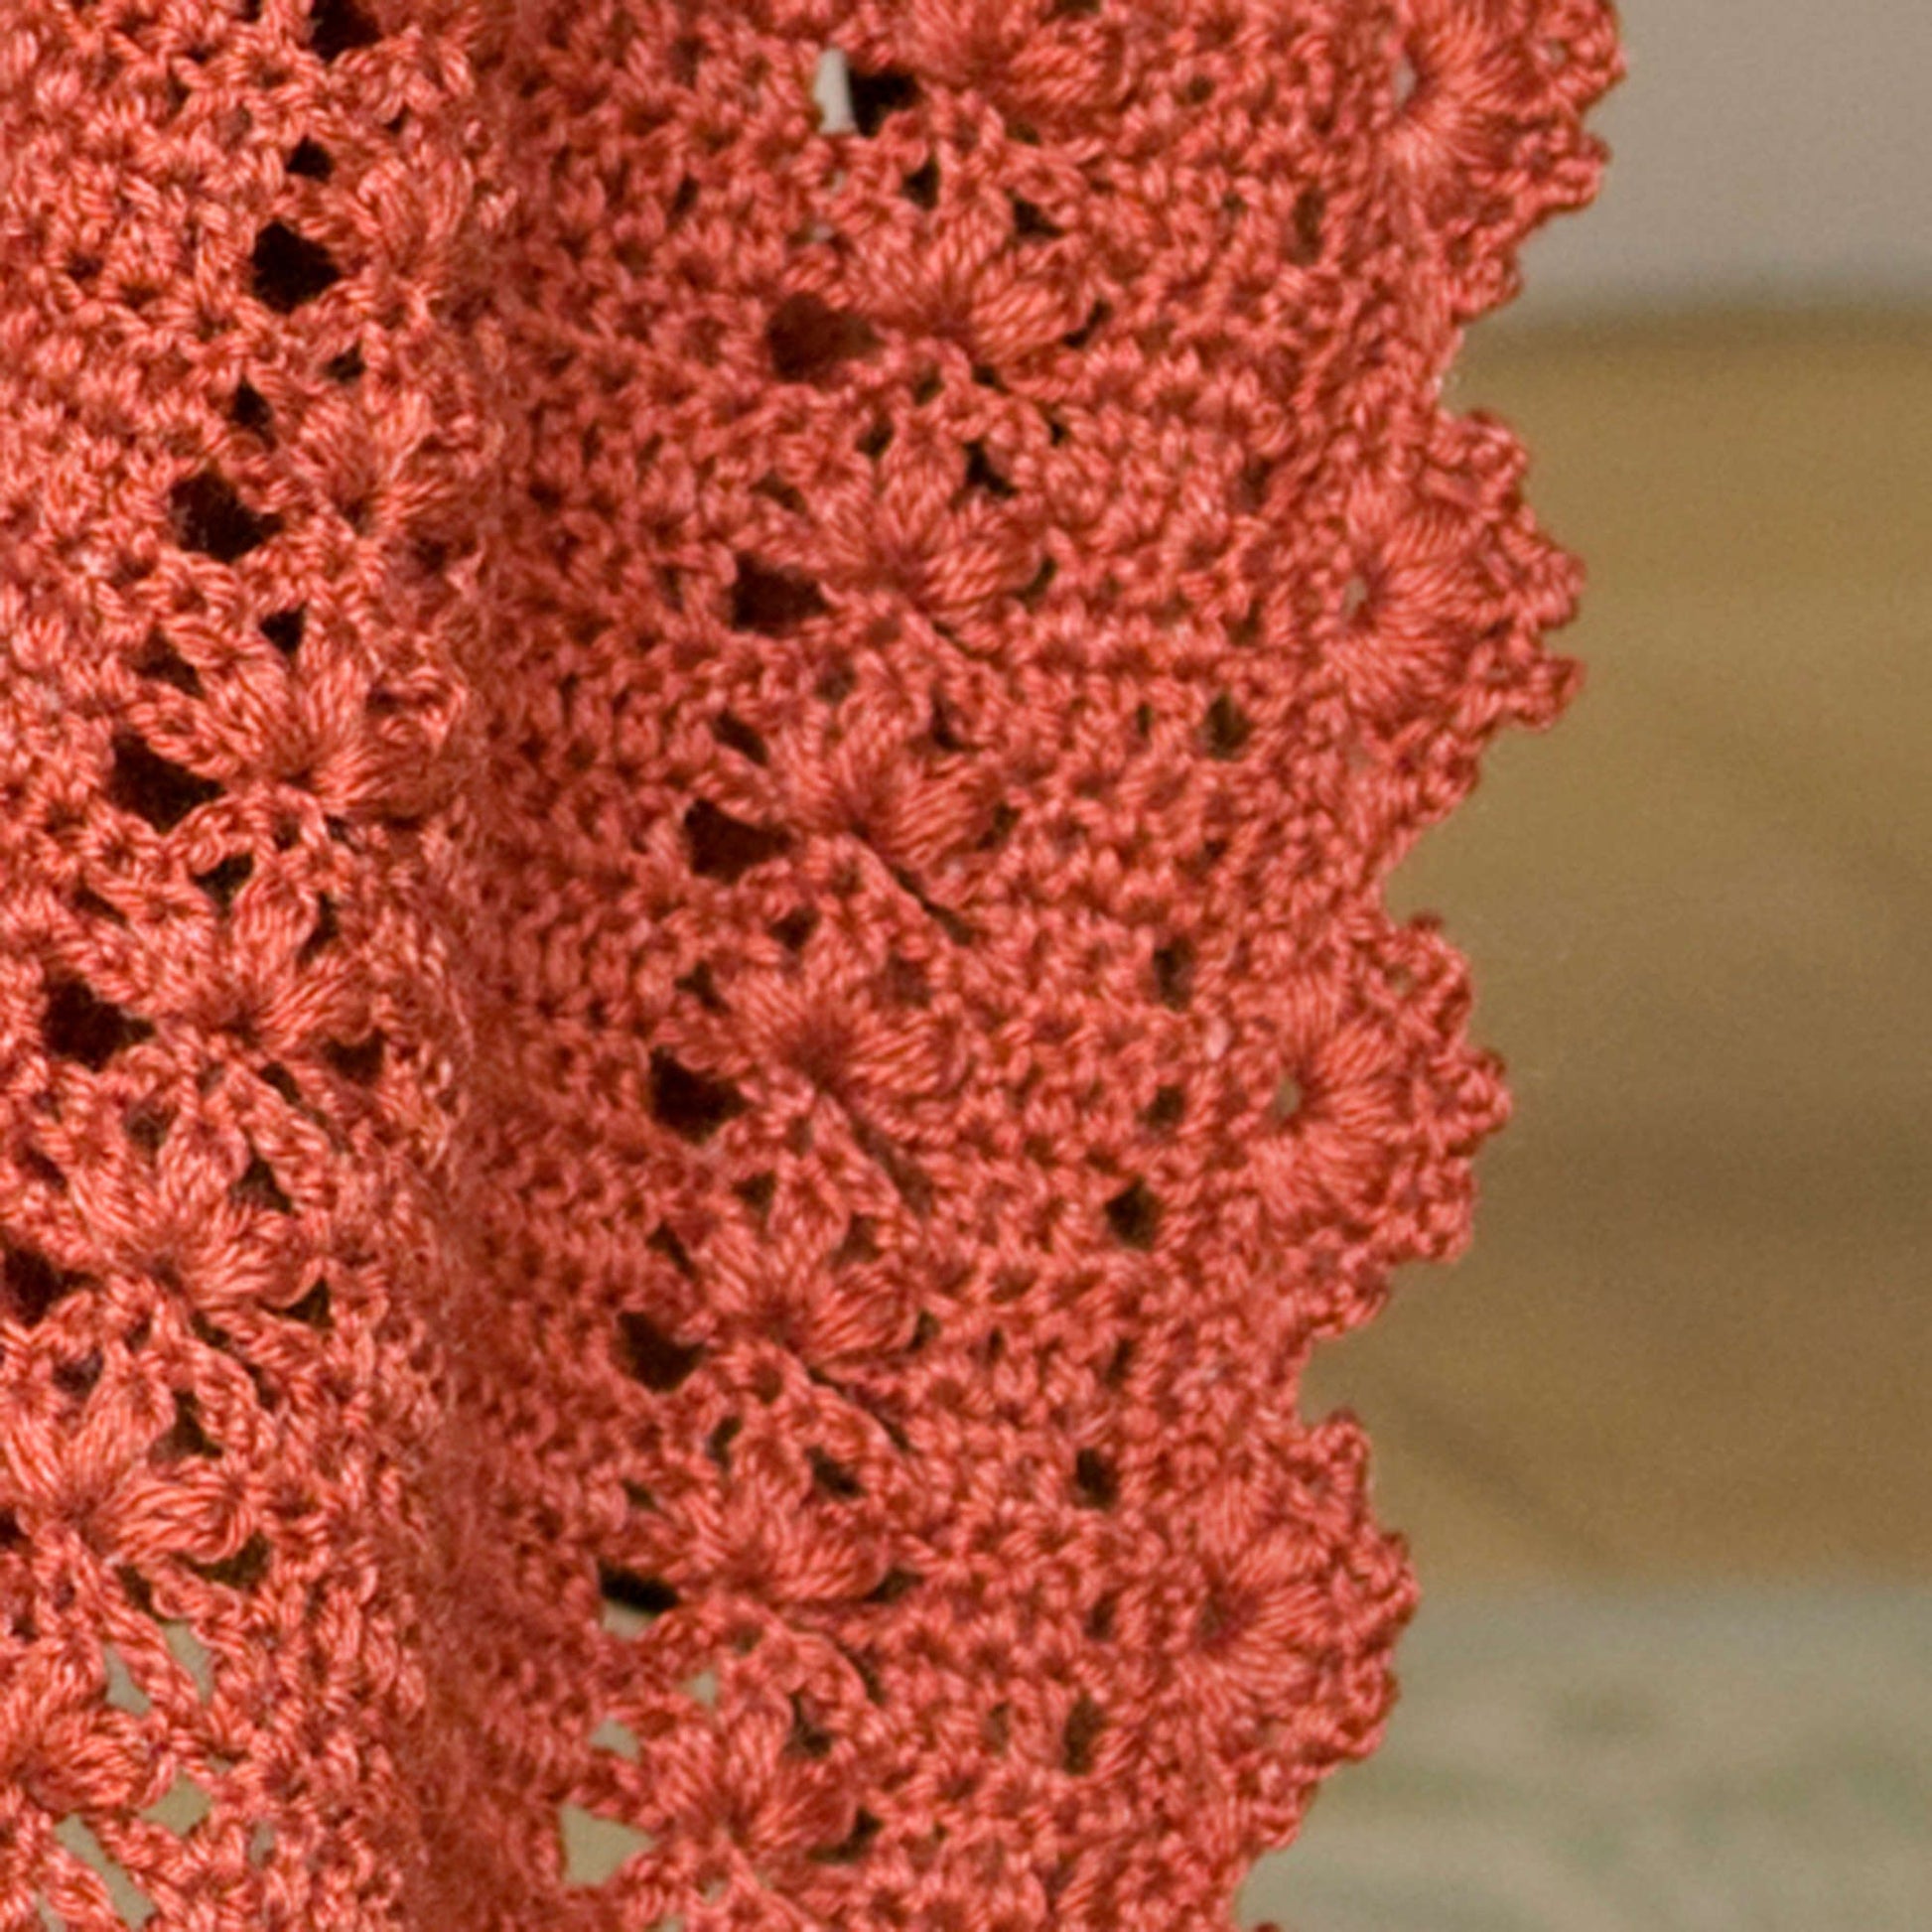 Free Red Heart Trefoil Throw Crochet Pattern